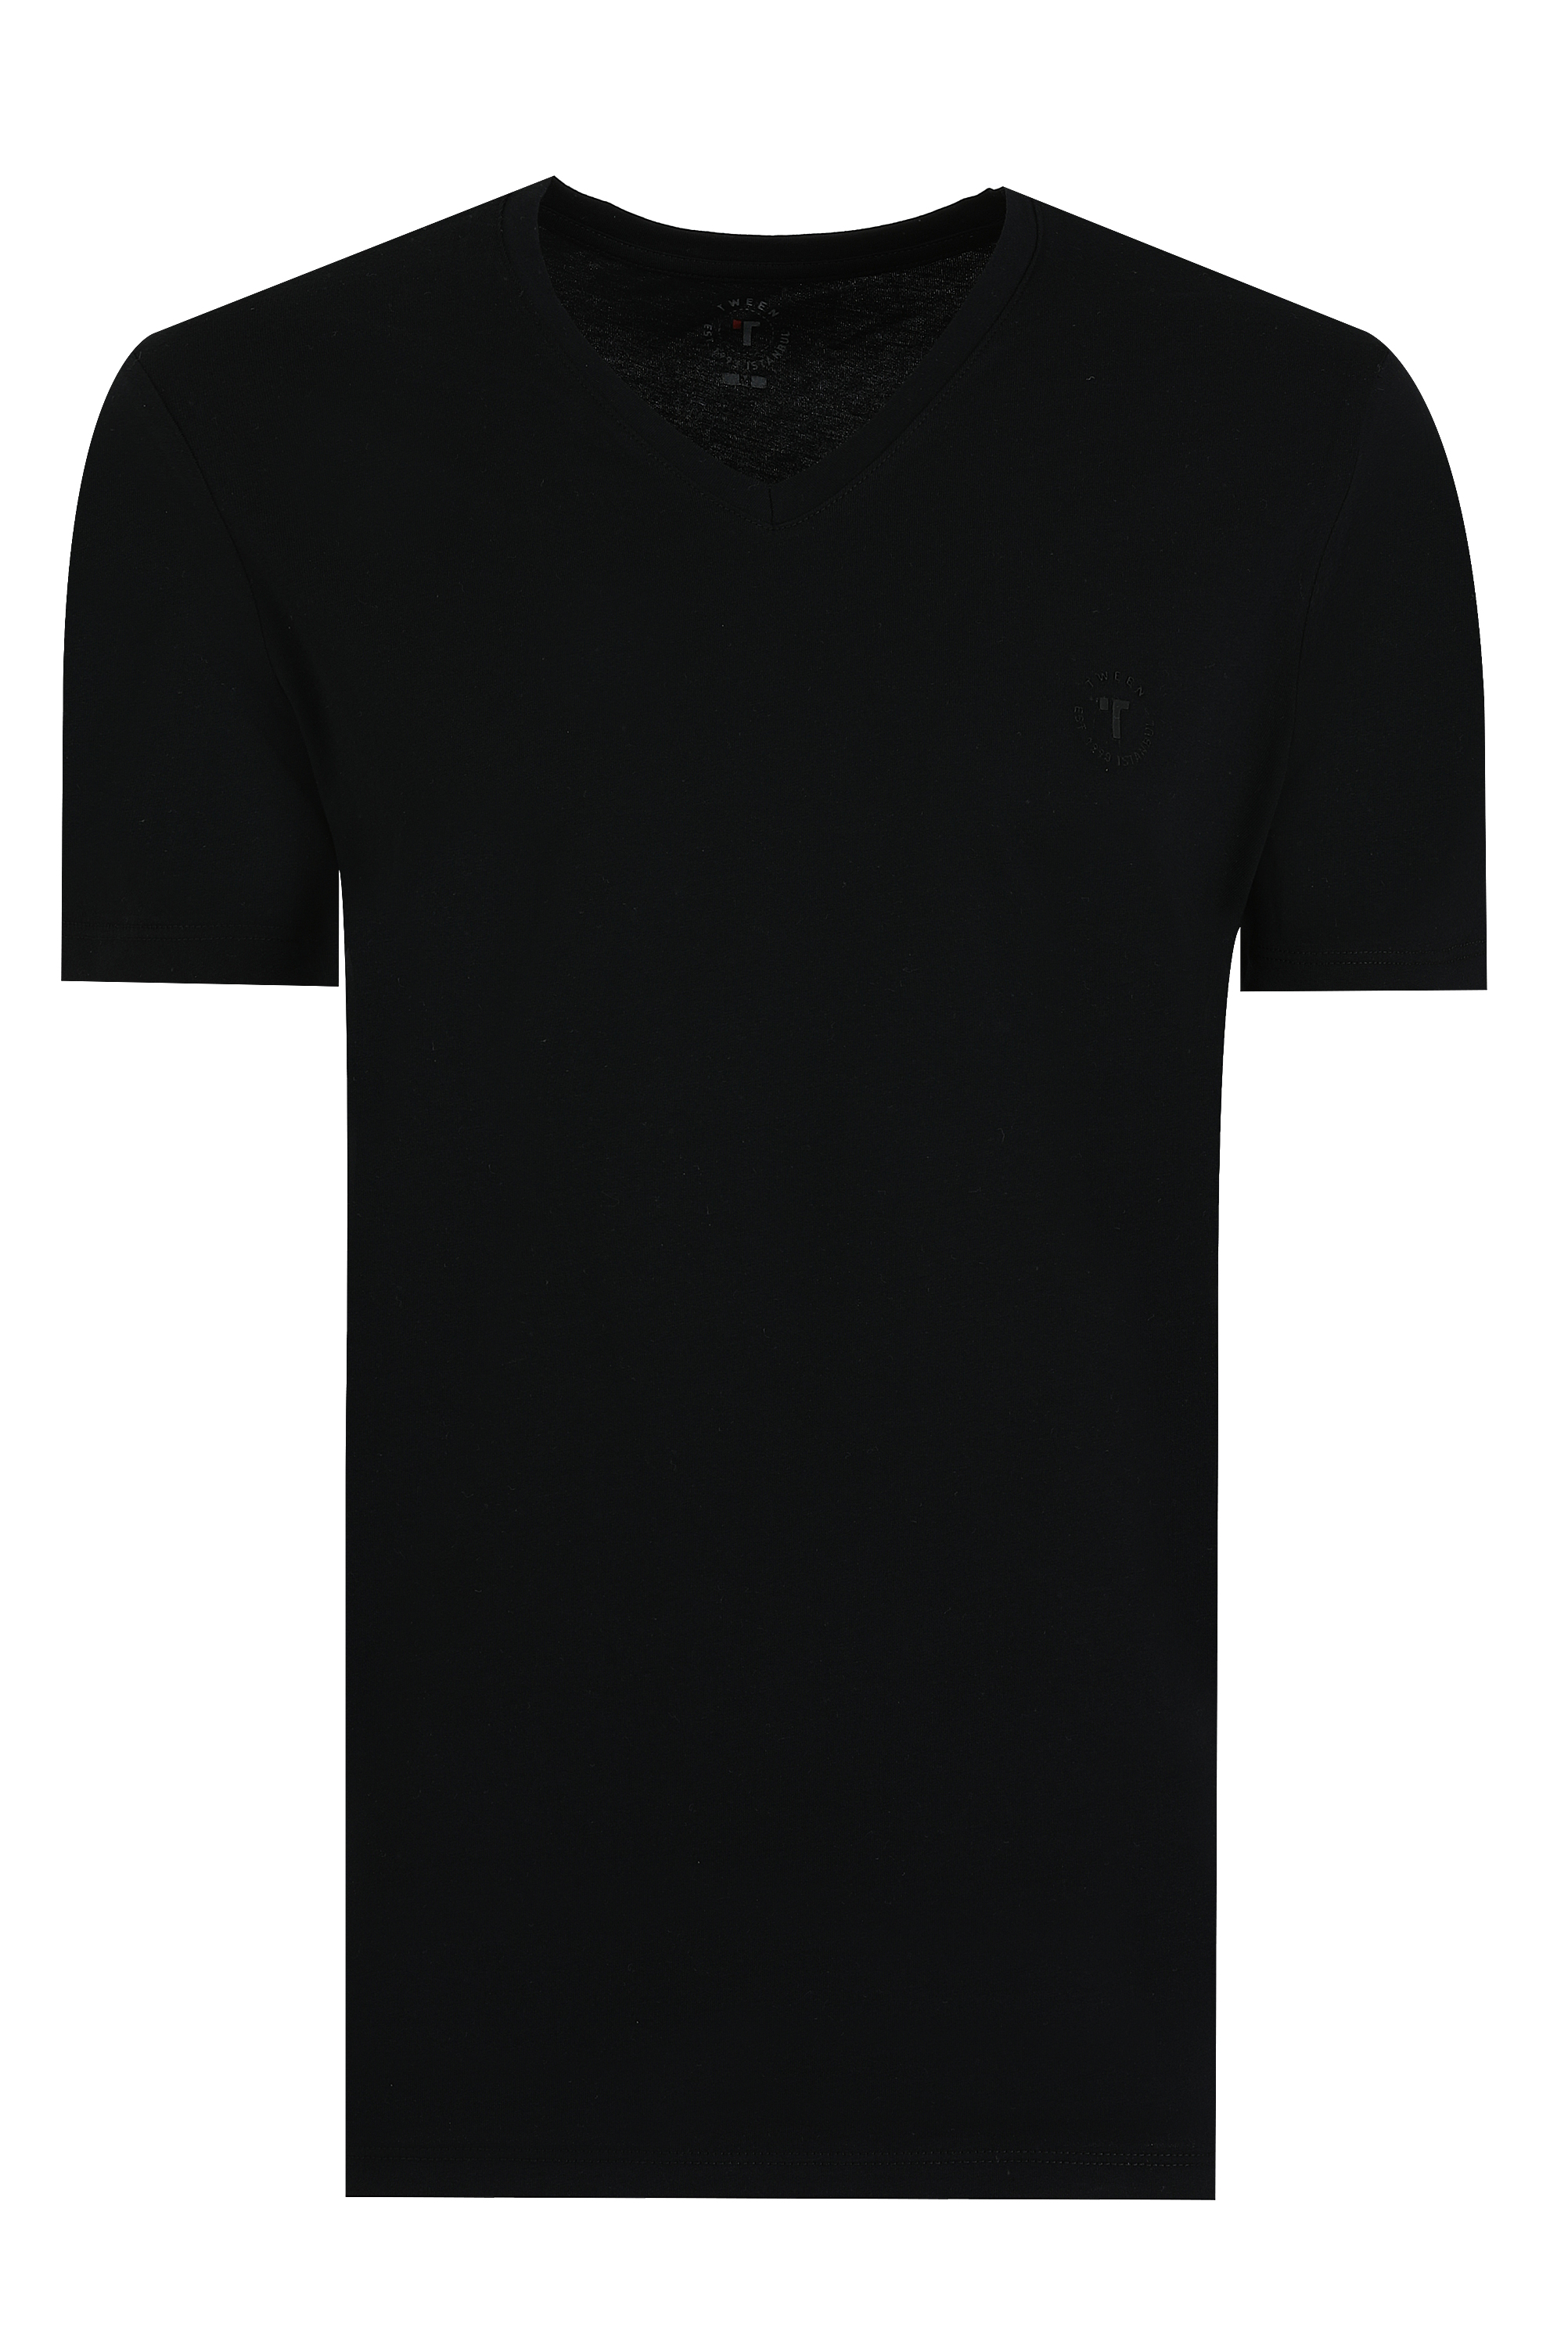 Damat Tween Tween Siyah T-shirt. 1